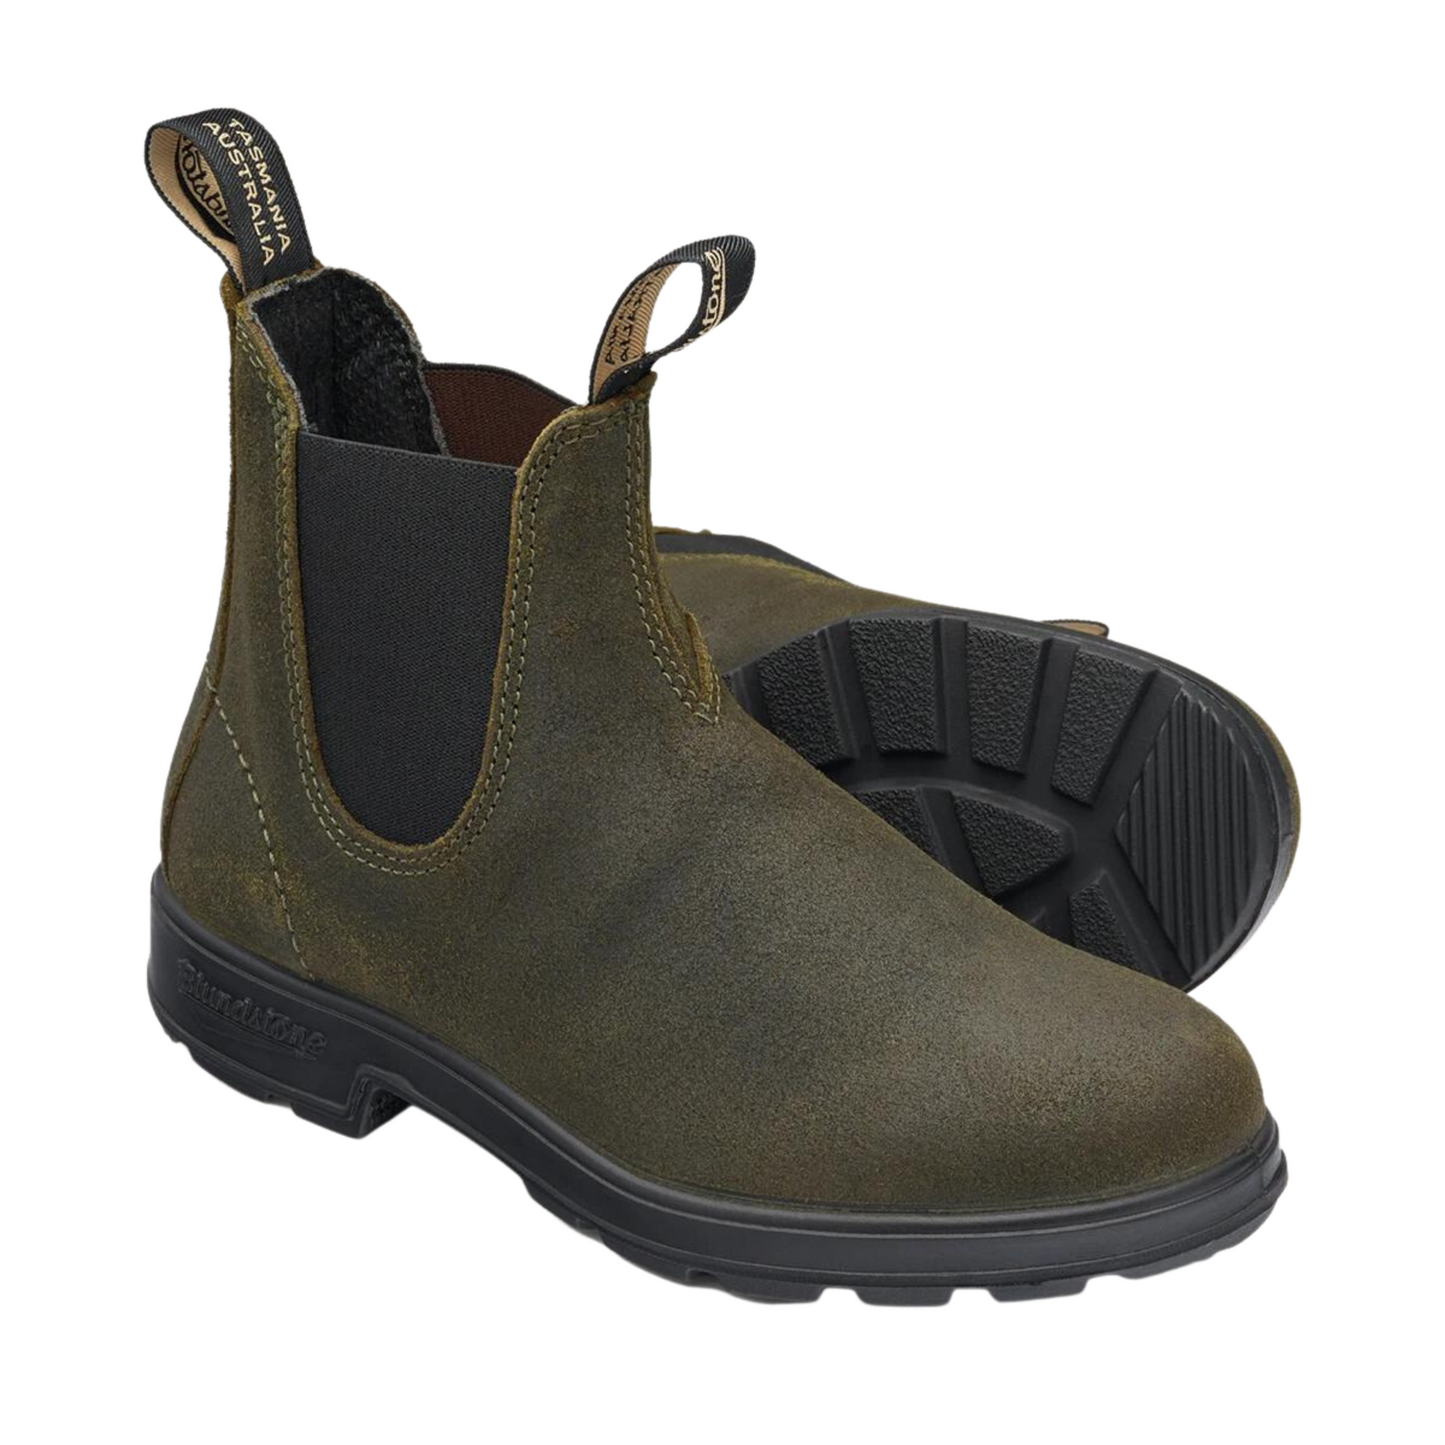 Blundstone 1615 Men's Originals Suede Boots - Dark Olive